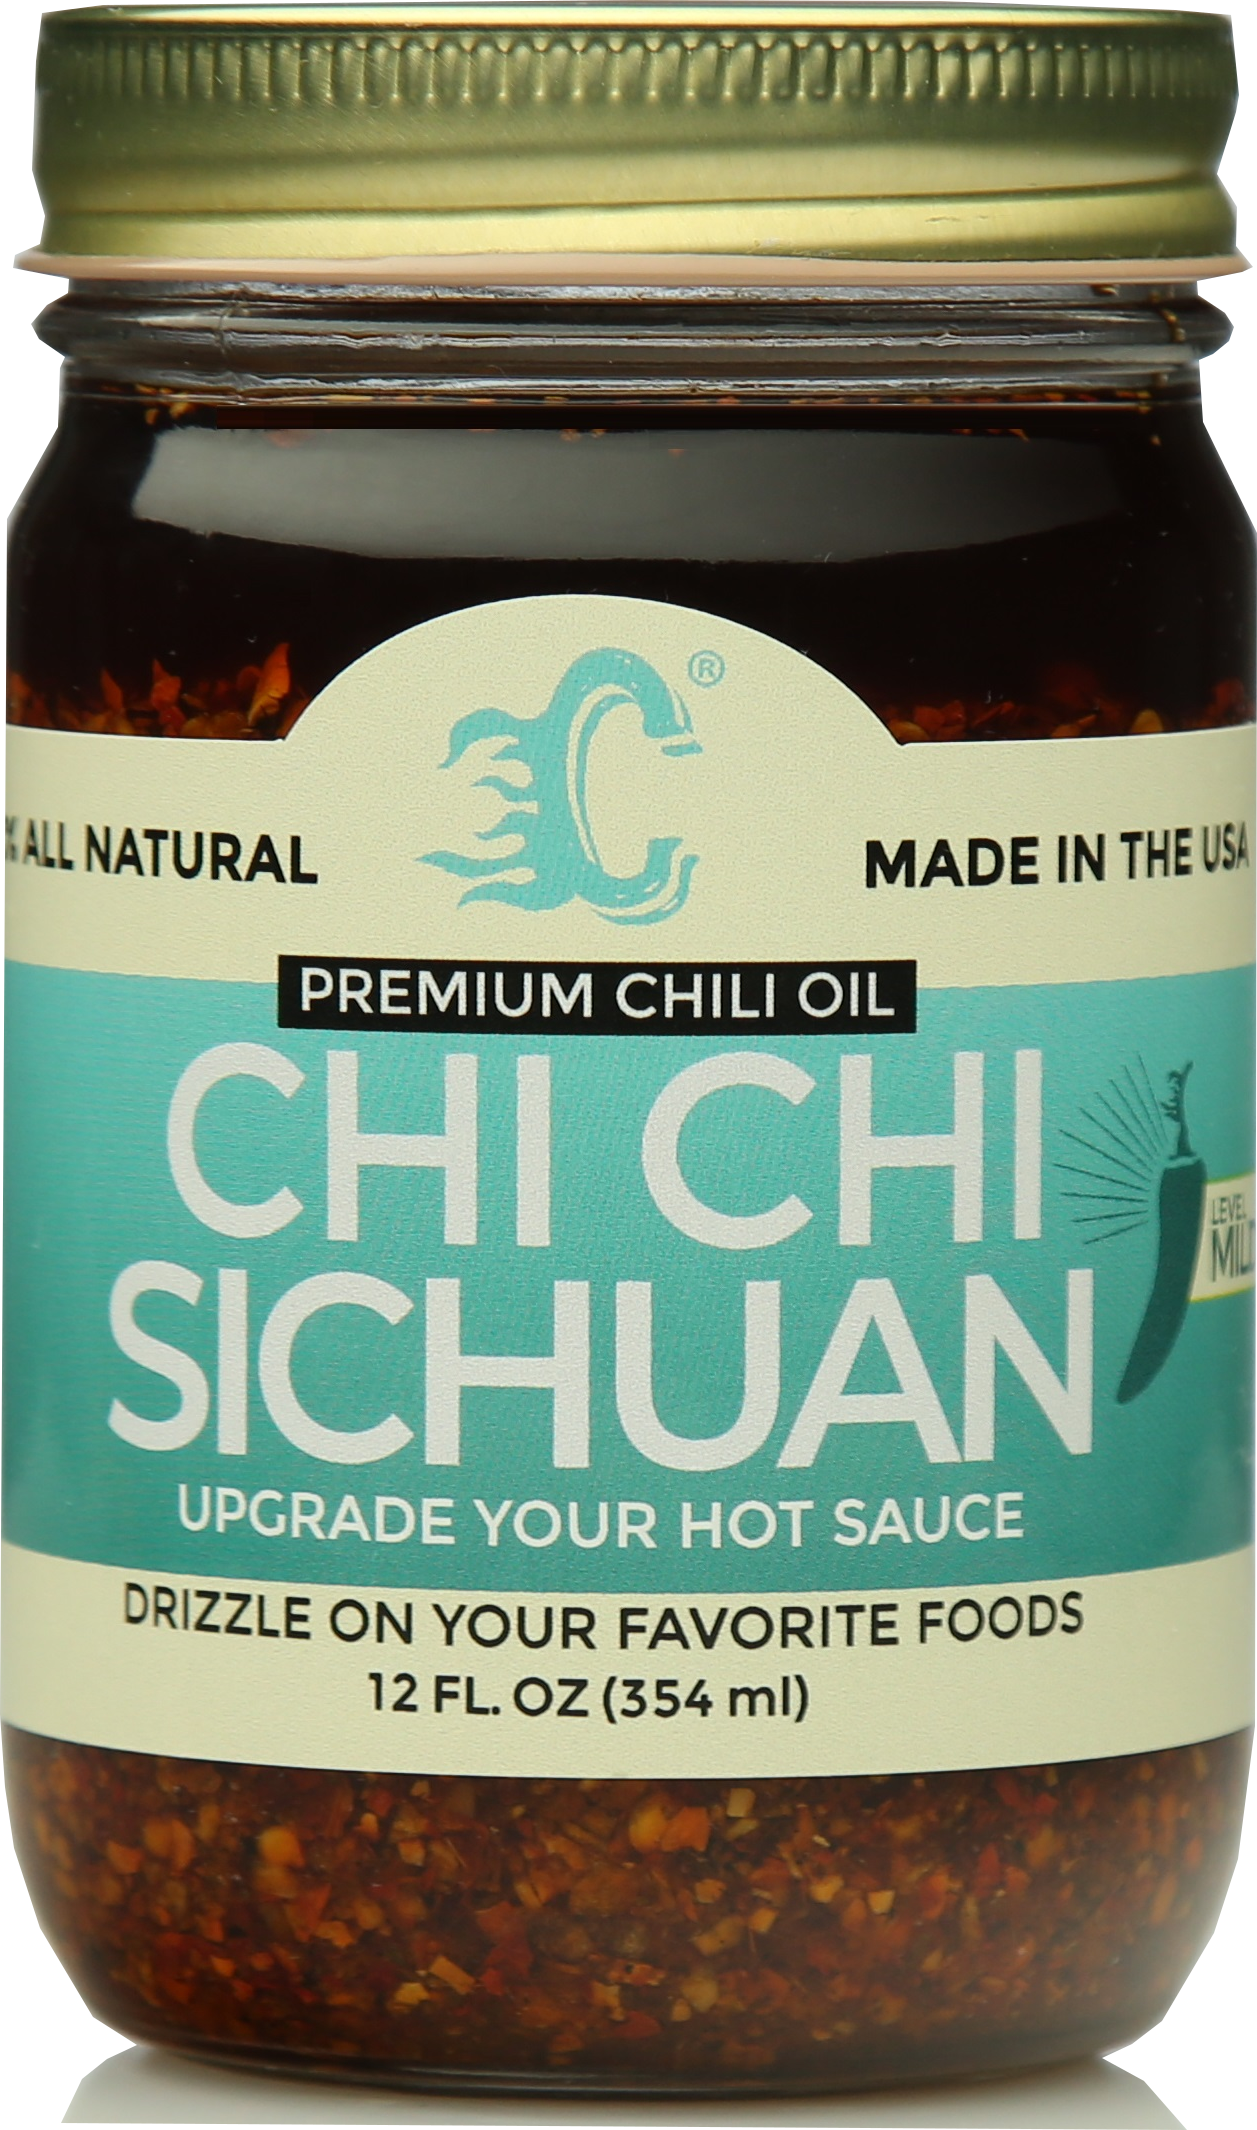 Chi Chi Sichuan - All Natural Premium Crunchy Chili Oil Condiment (Mild) 12 OZ